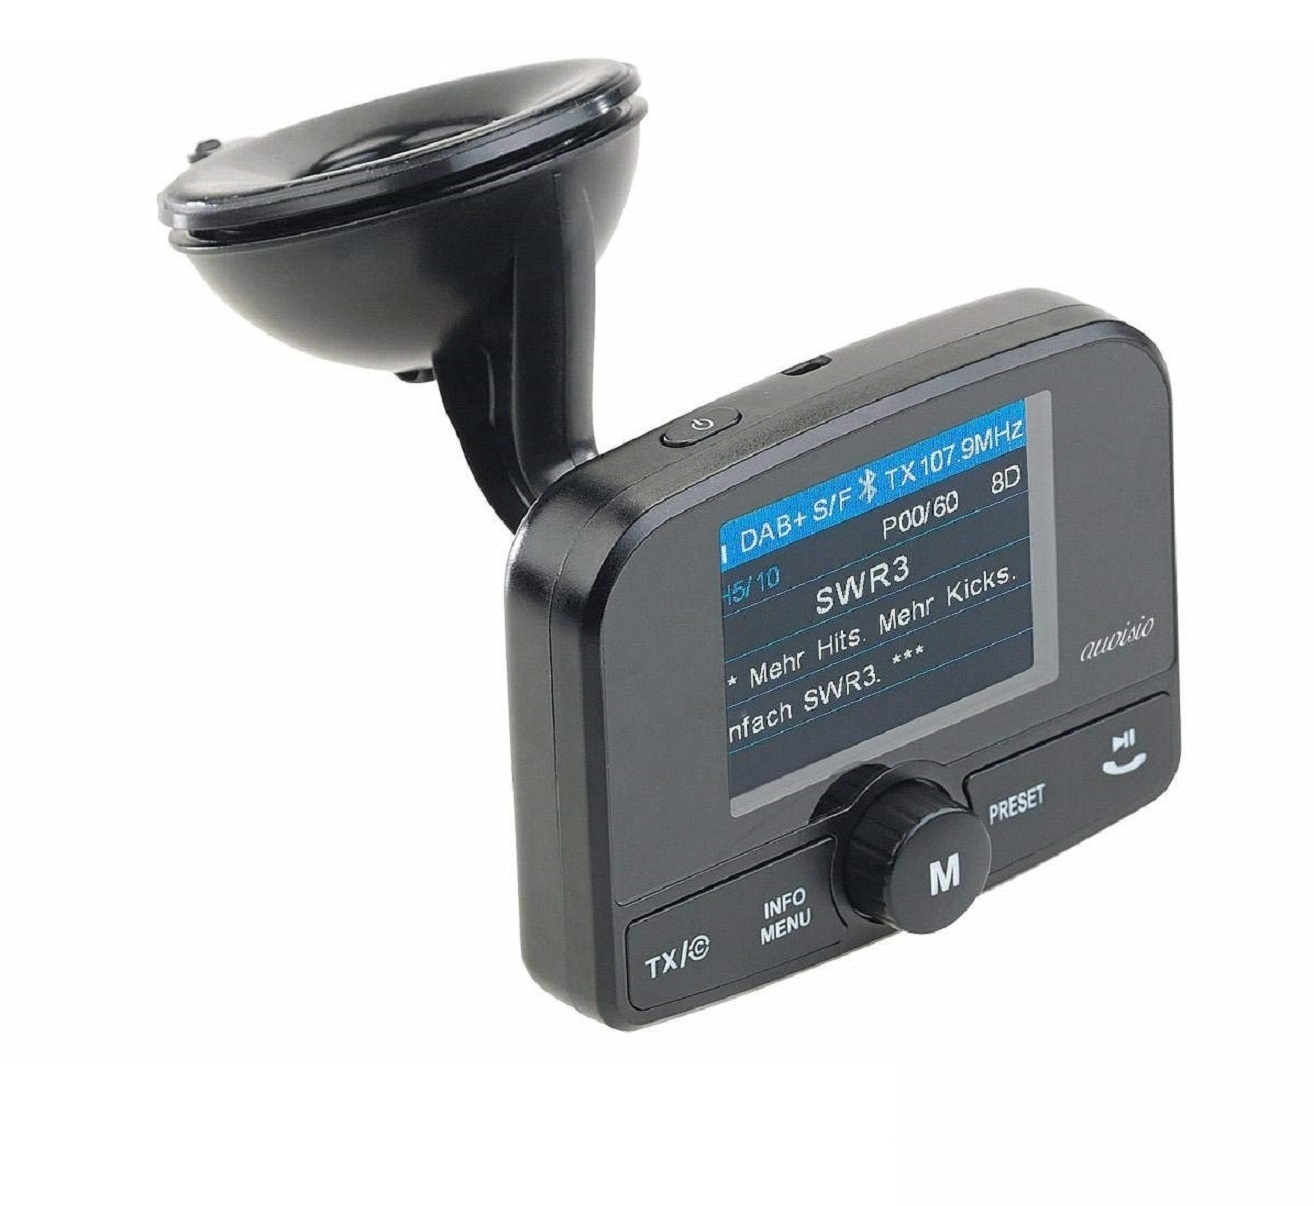 AUVISIO FMX-640.dab FM Bluetooth Transmitter